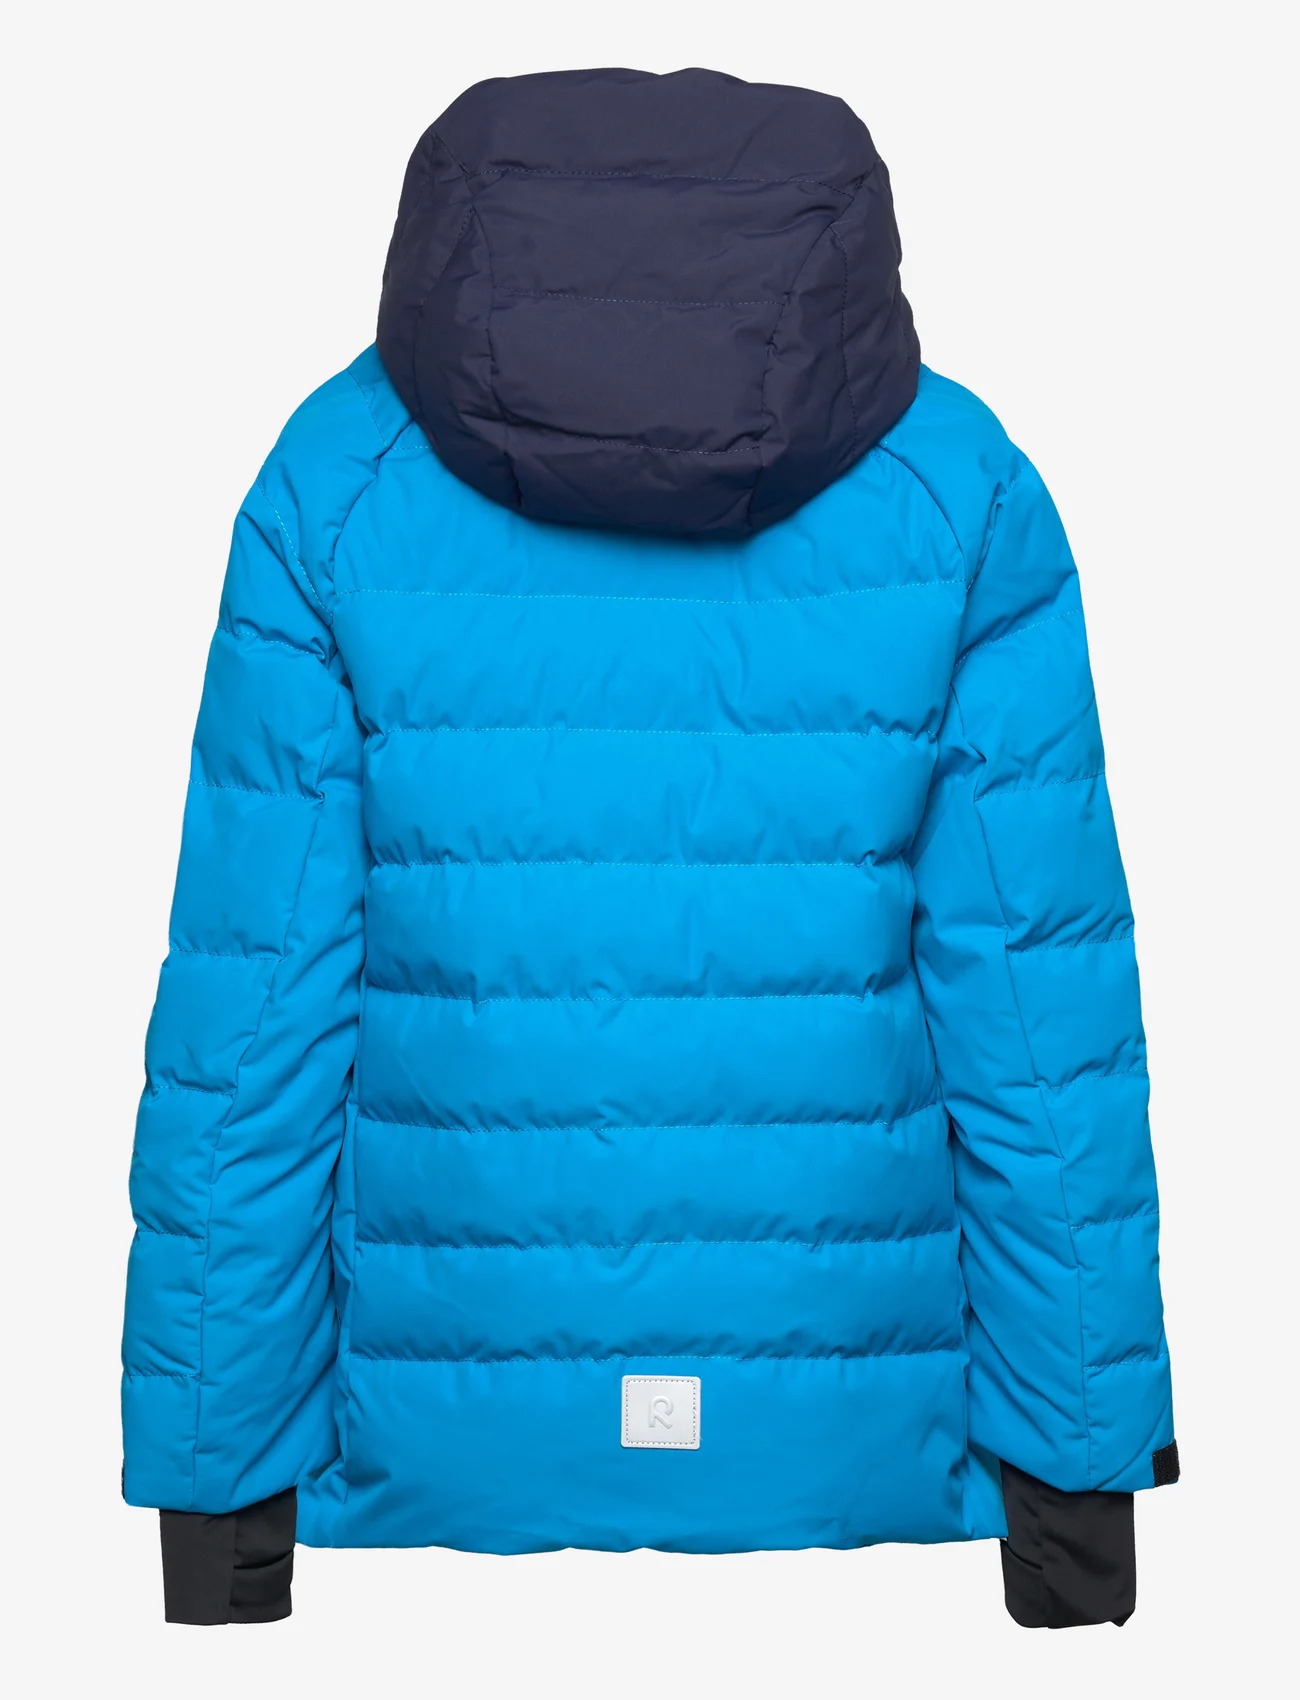 Reima - Juniors' Winter jacket Kuosku - dunjackor & fodrade jackor - true blue - 1